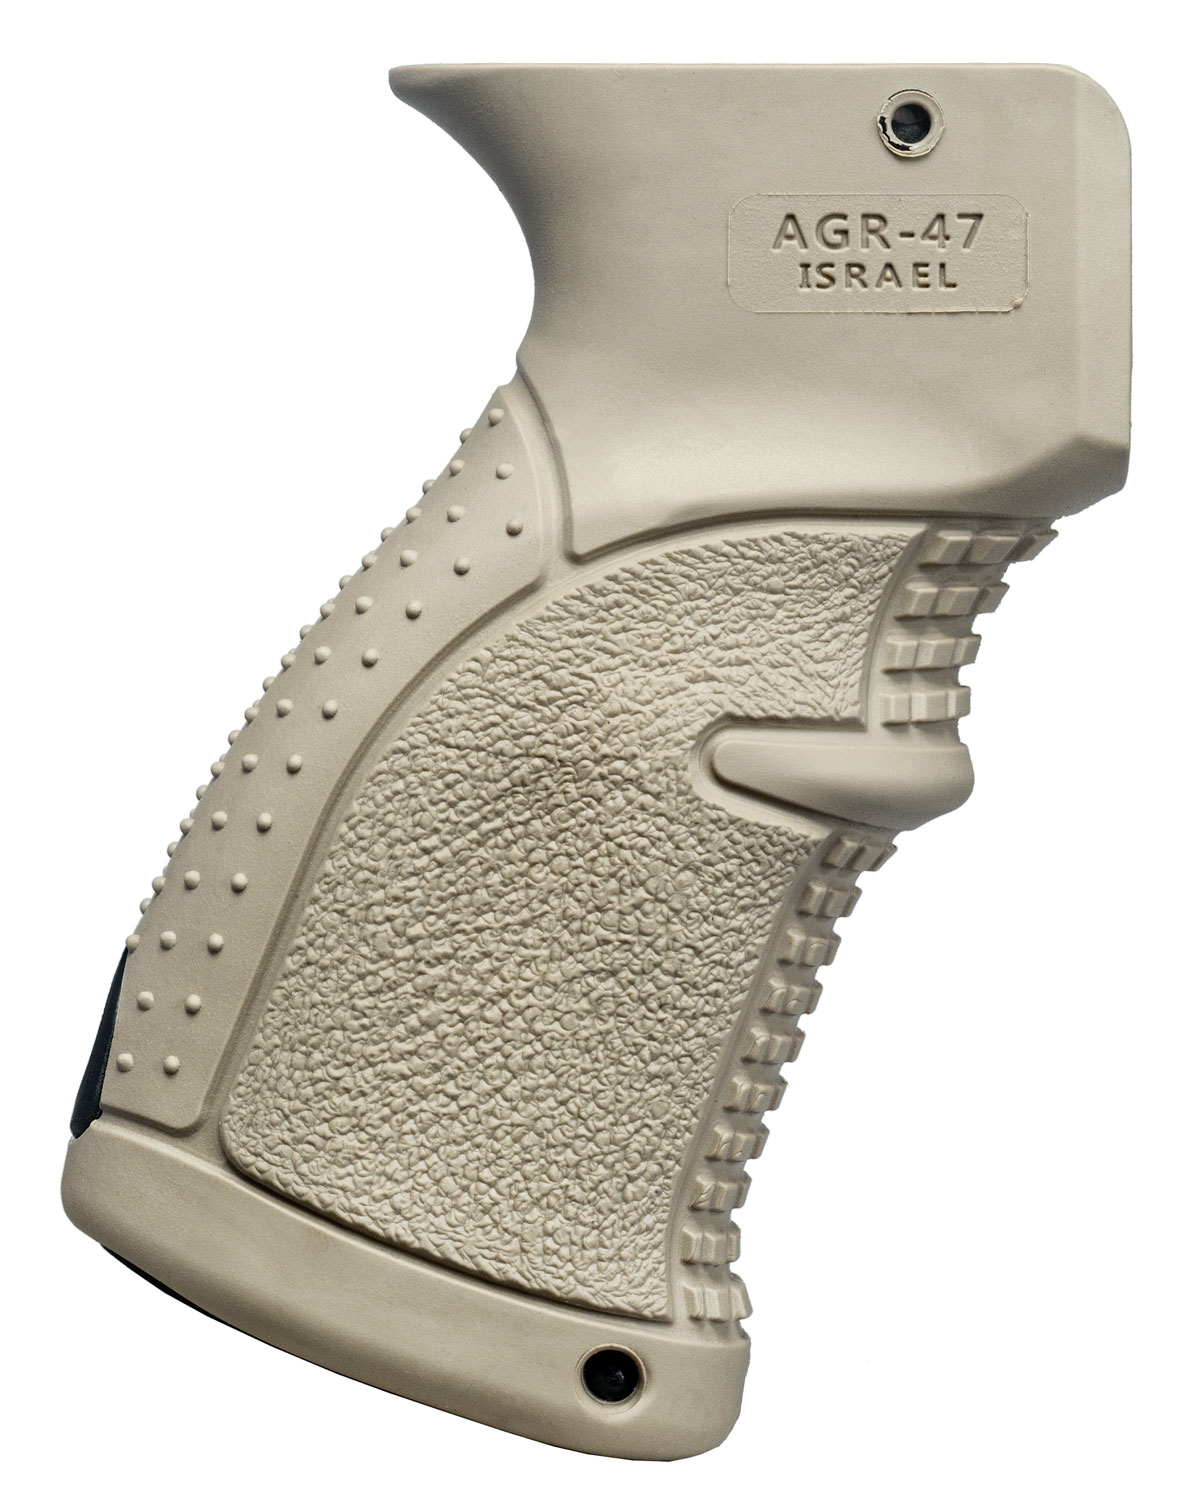 FAB DEFENSE (USIQ) FX-AGR47T AGR-47 Ergonomic Pistol Grip AK-47/74 Polymer with Over-Molded Rubber Tan